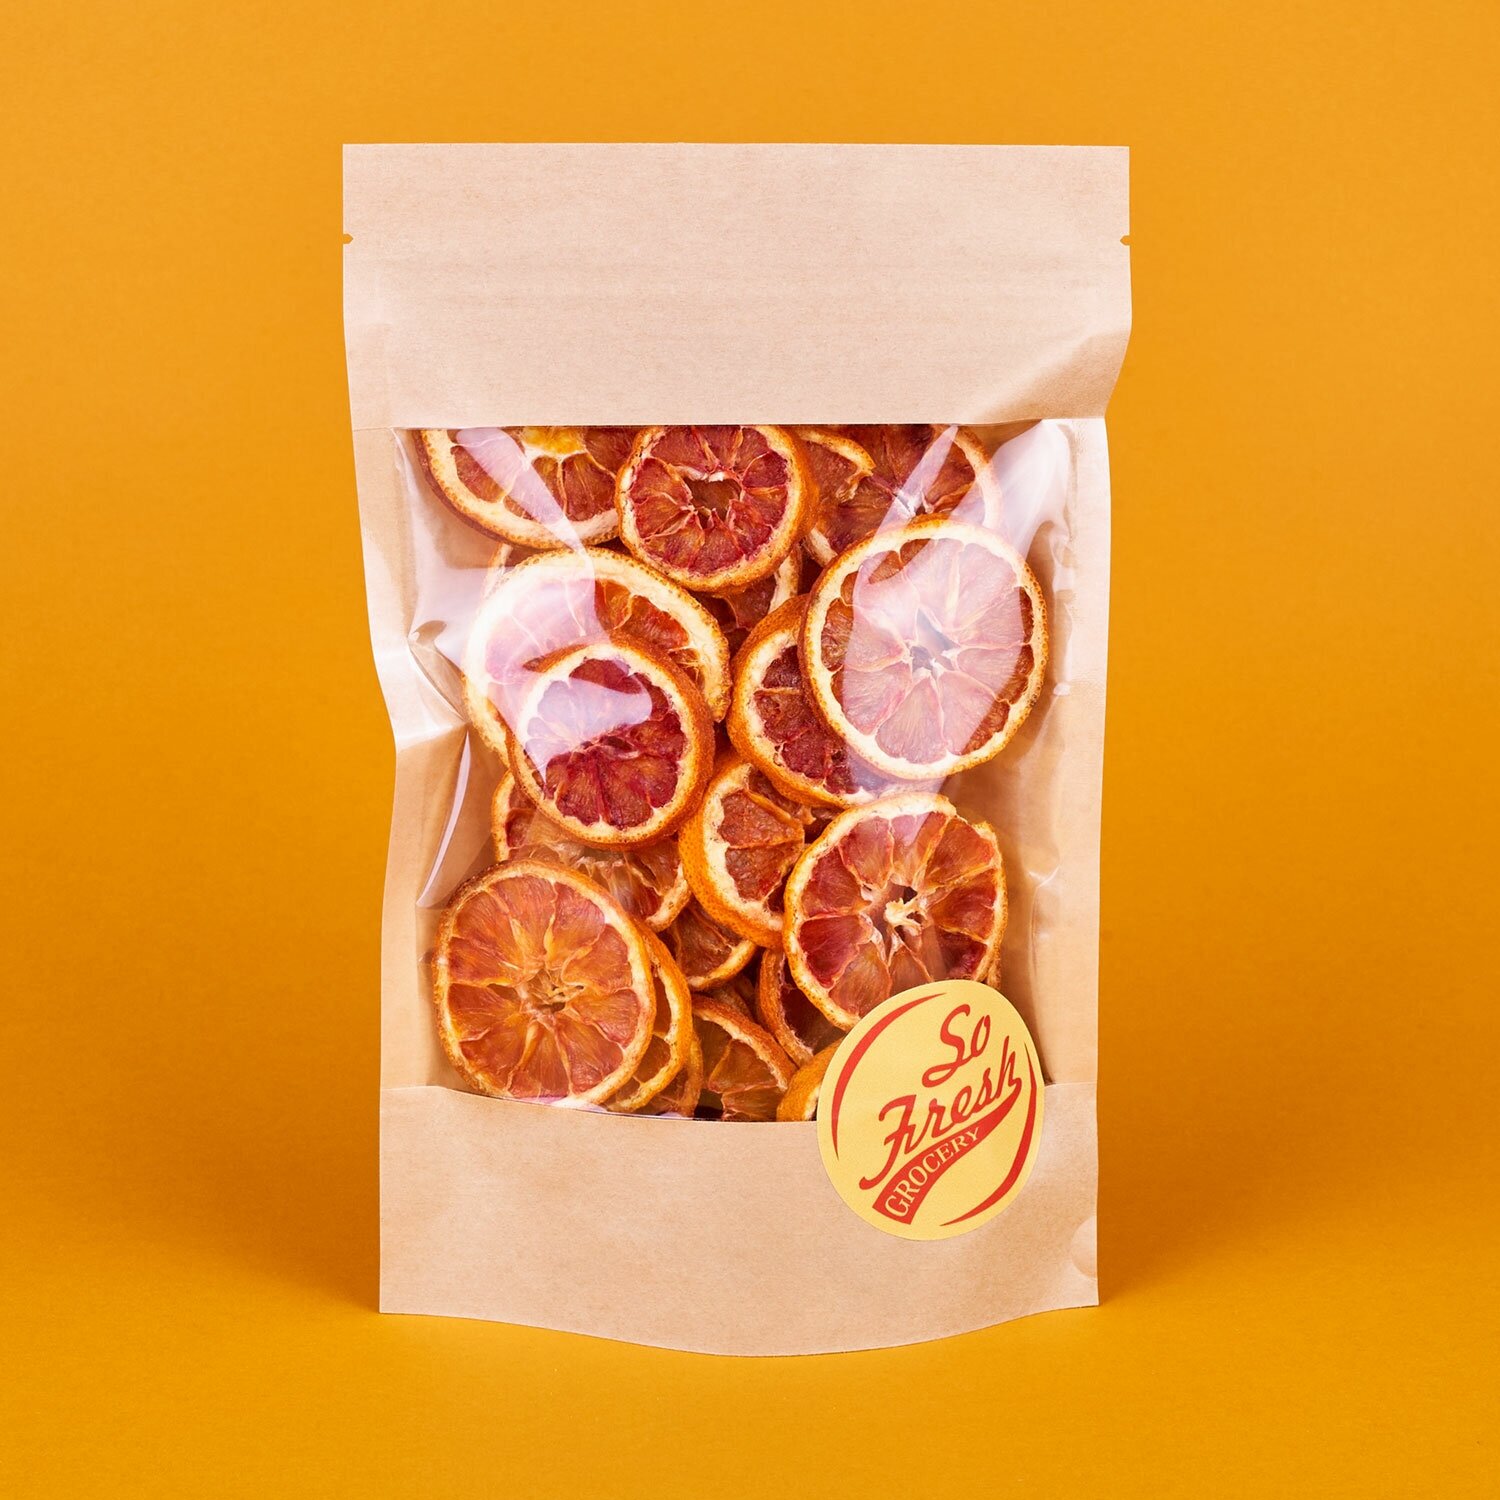 Фруктовые чипсы/ фрипсы/ сухофрукты цитрусовые So Fresh grocery красный апельсин сушеный кольцами без сахара, Иран, 100 г.